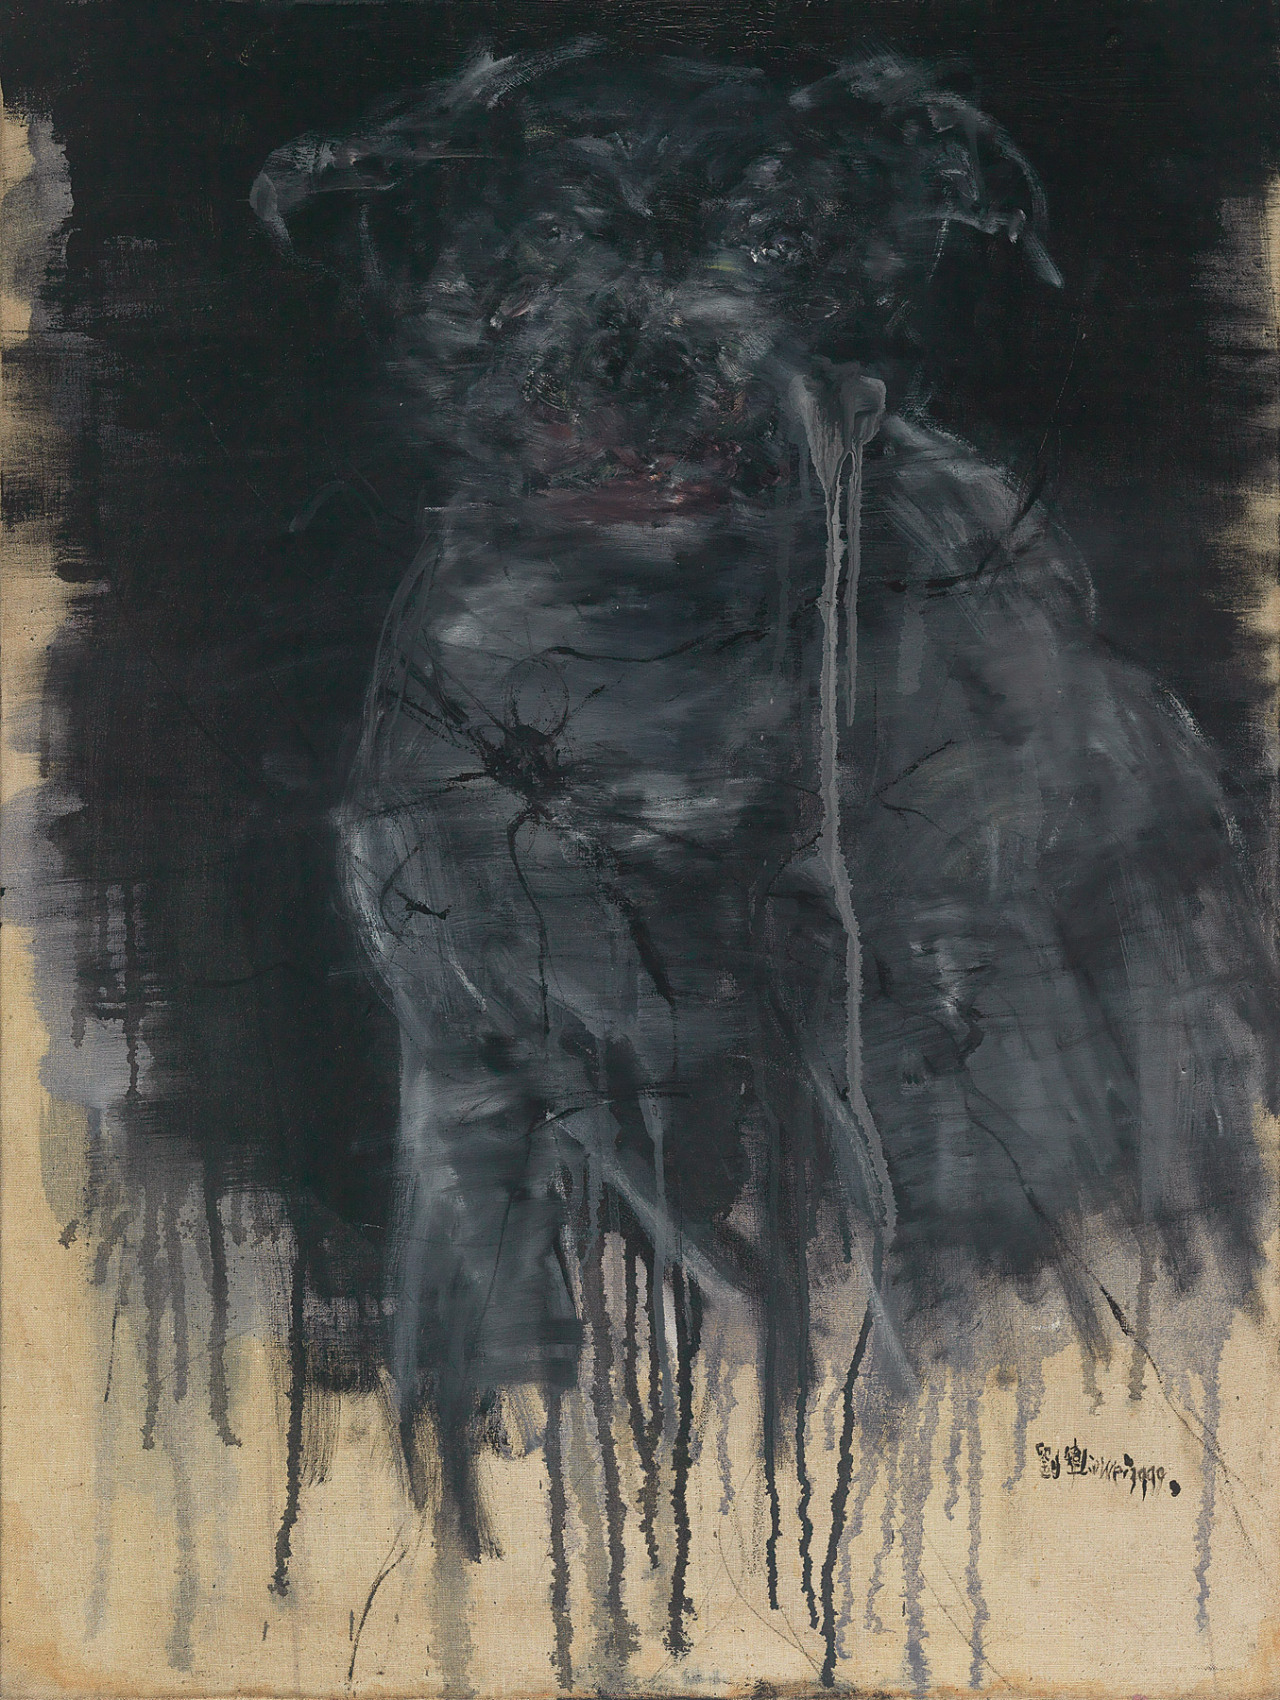 Liu Wei (Chinese, b. 1965), Dog No. 2, 1999. Oil on canvas, 80 x 60 cm.